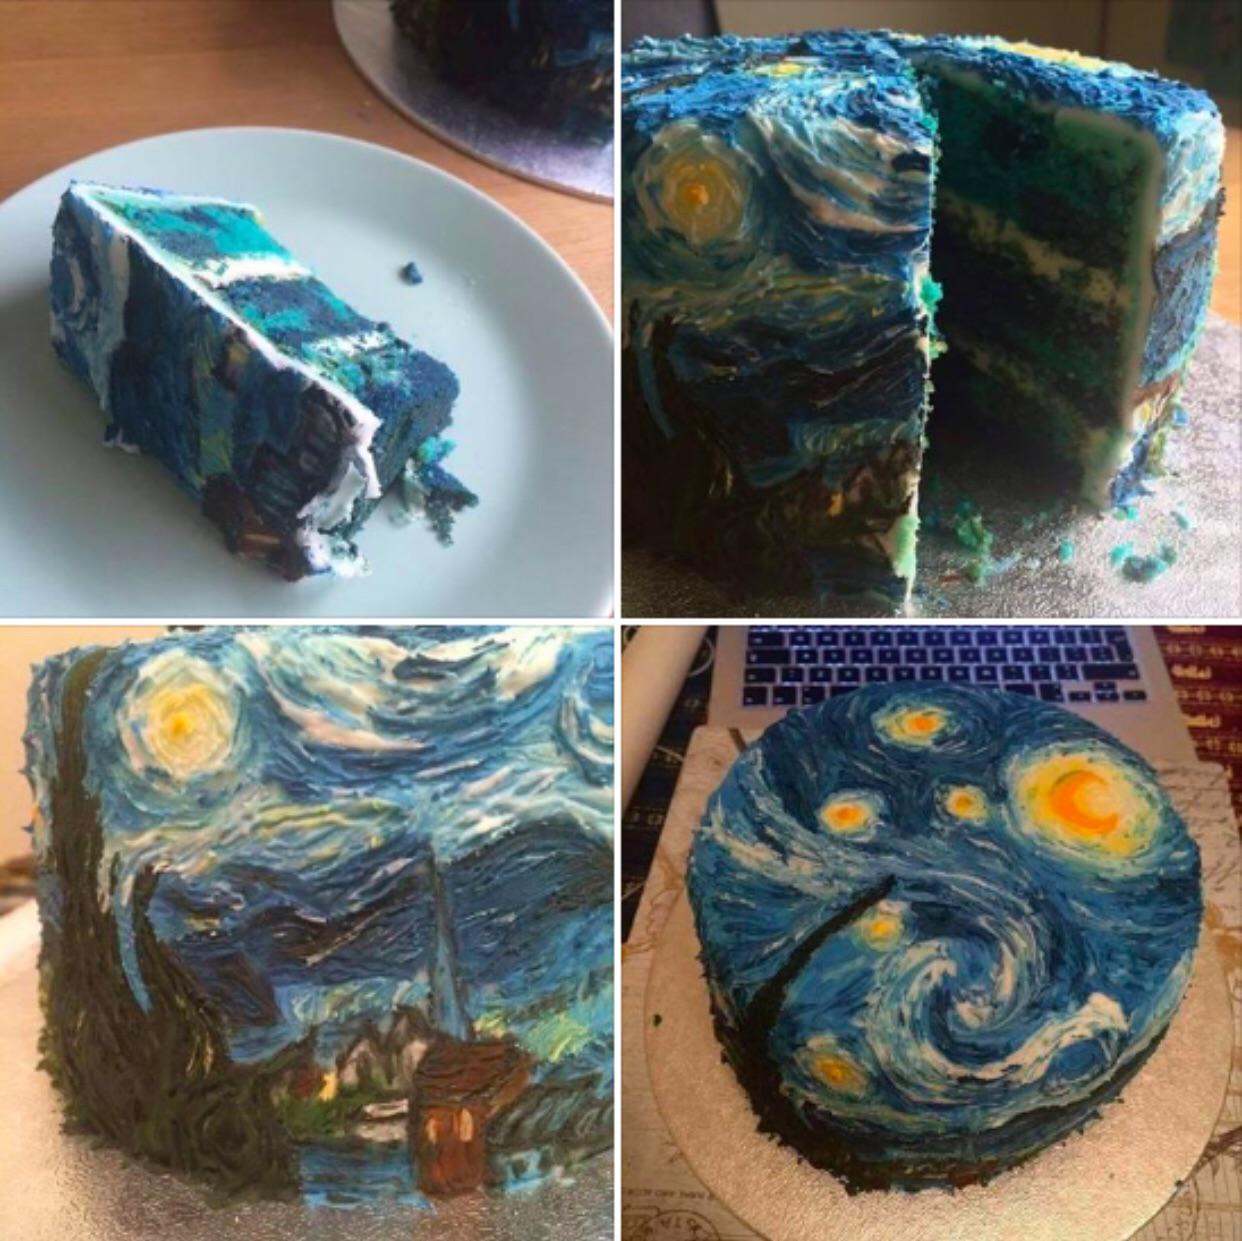 Van+Gogh+inspired+cake.